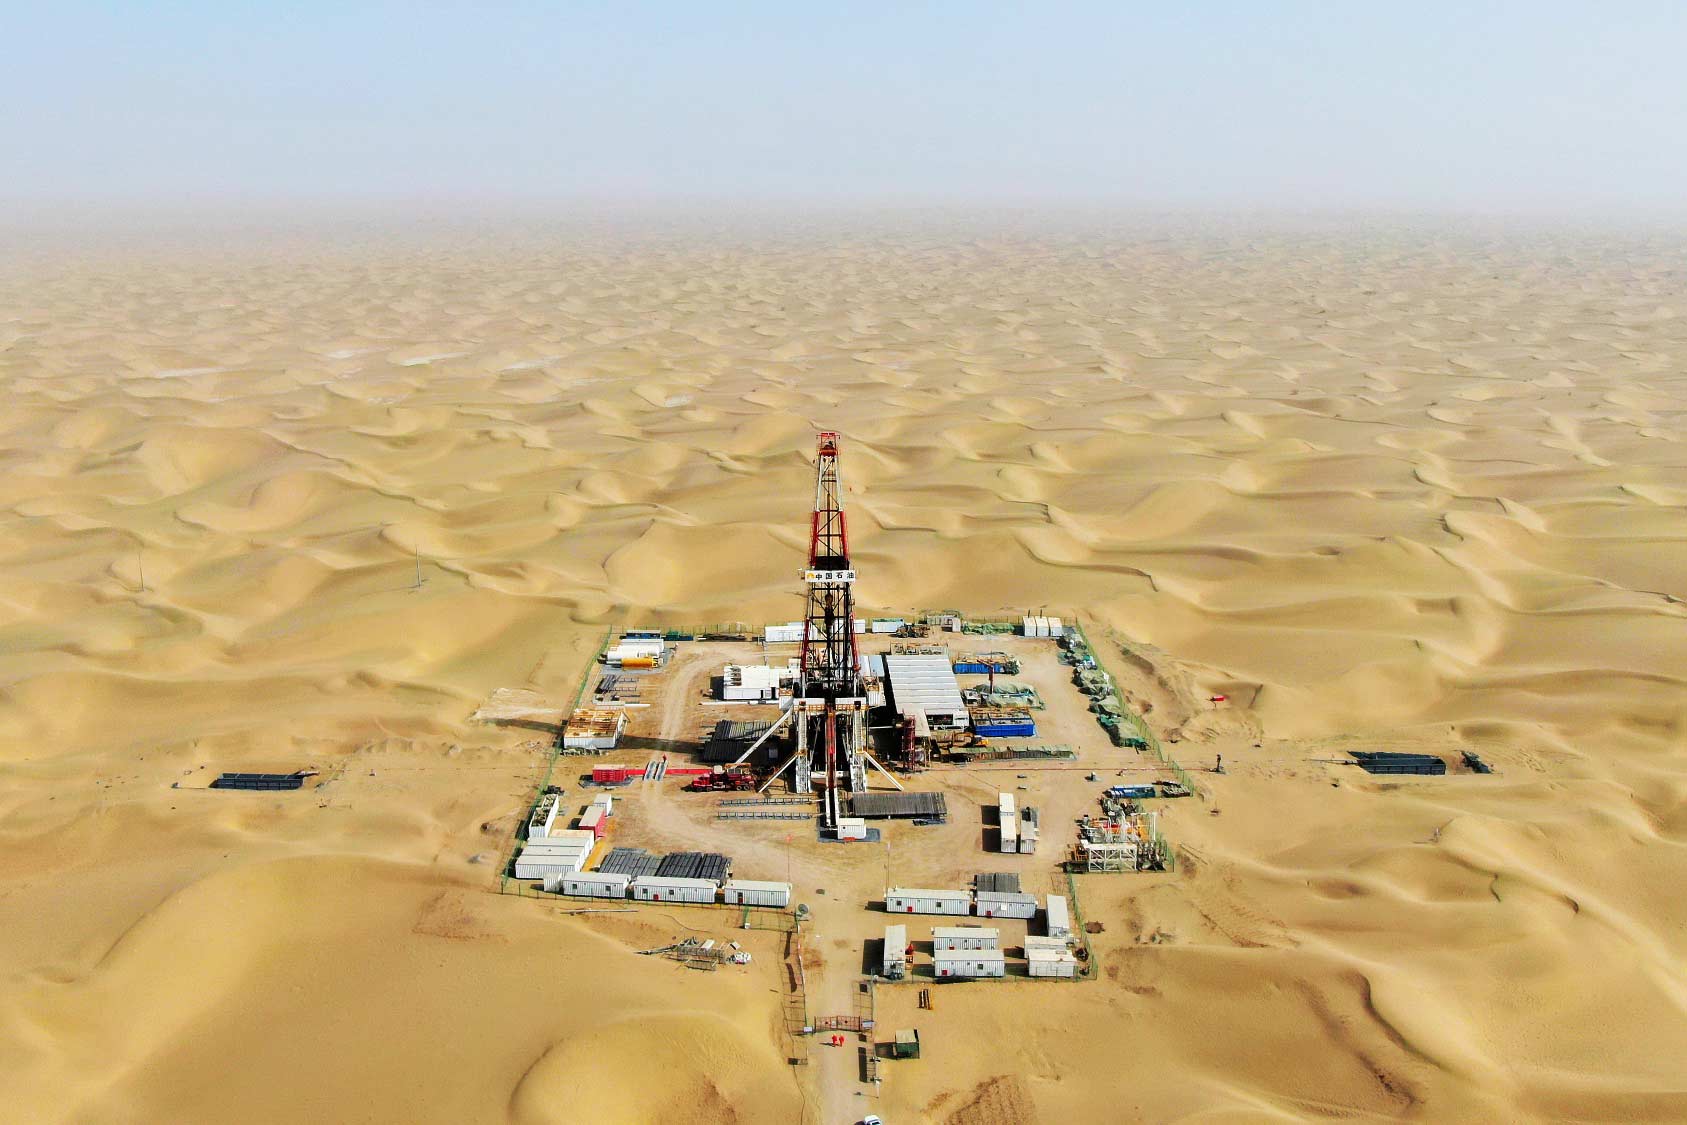 oil well tarim oilfield taklamakan desert xinjiang 647cf2b65d464daf30f1bfa7